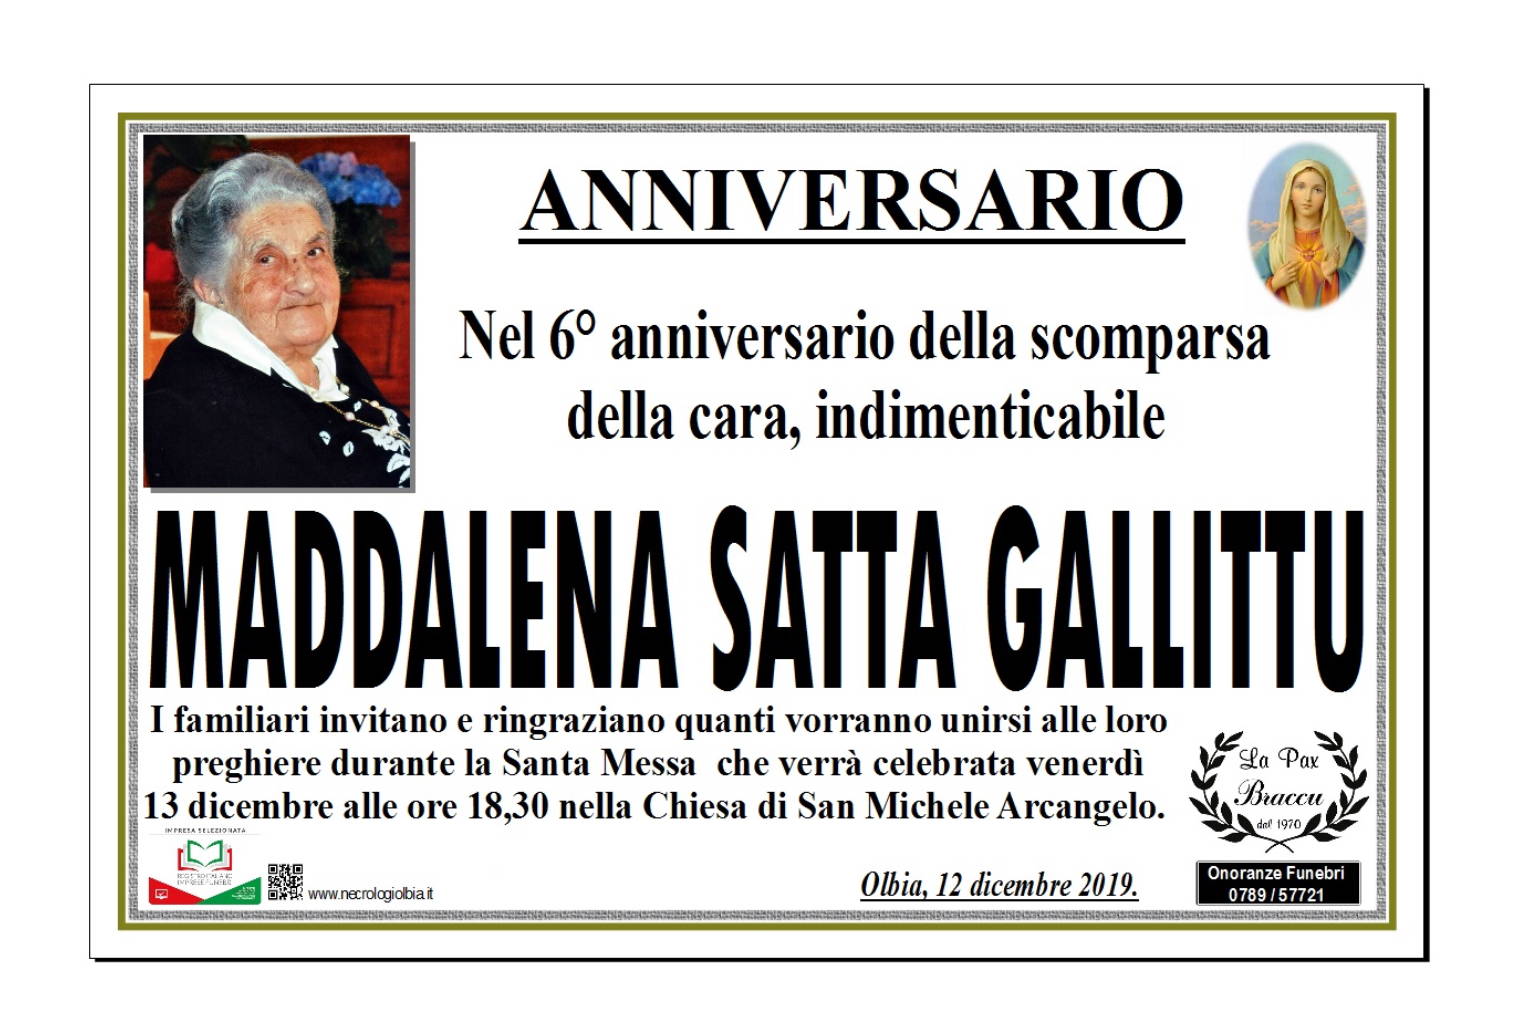 Maddalena Satta Gallittu